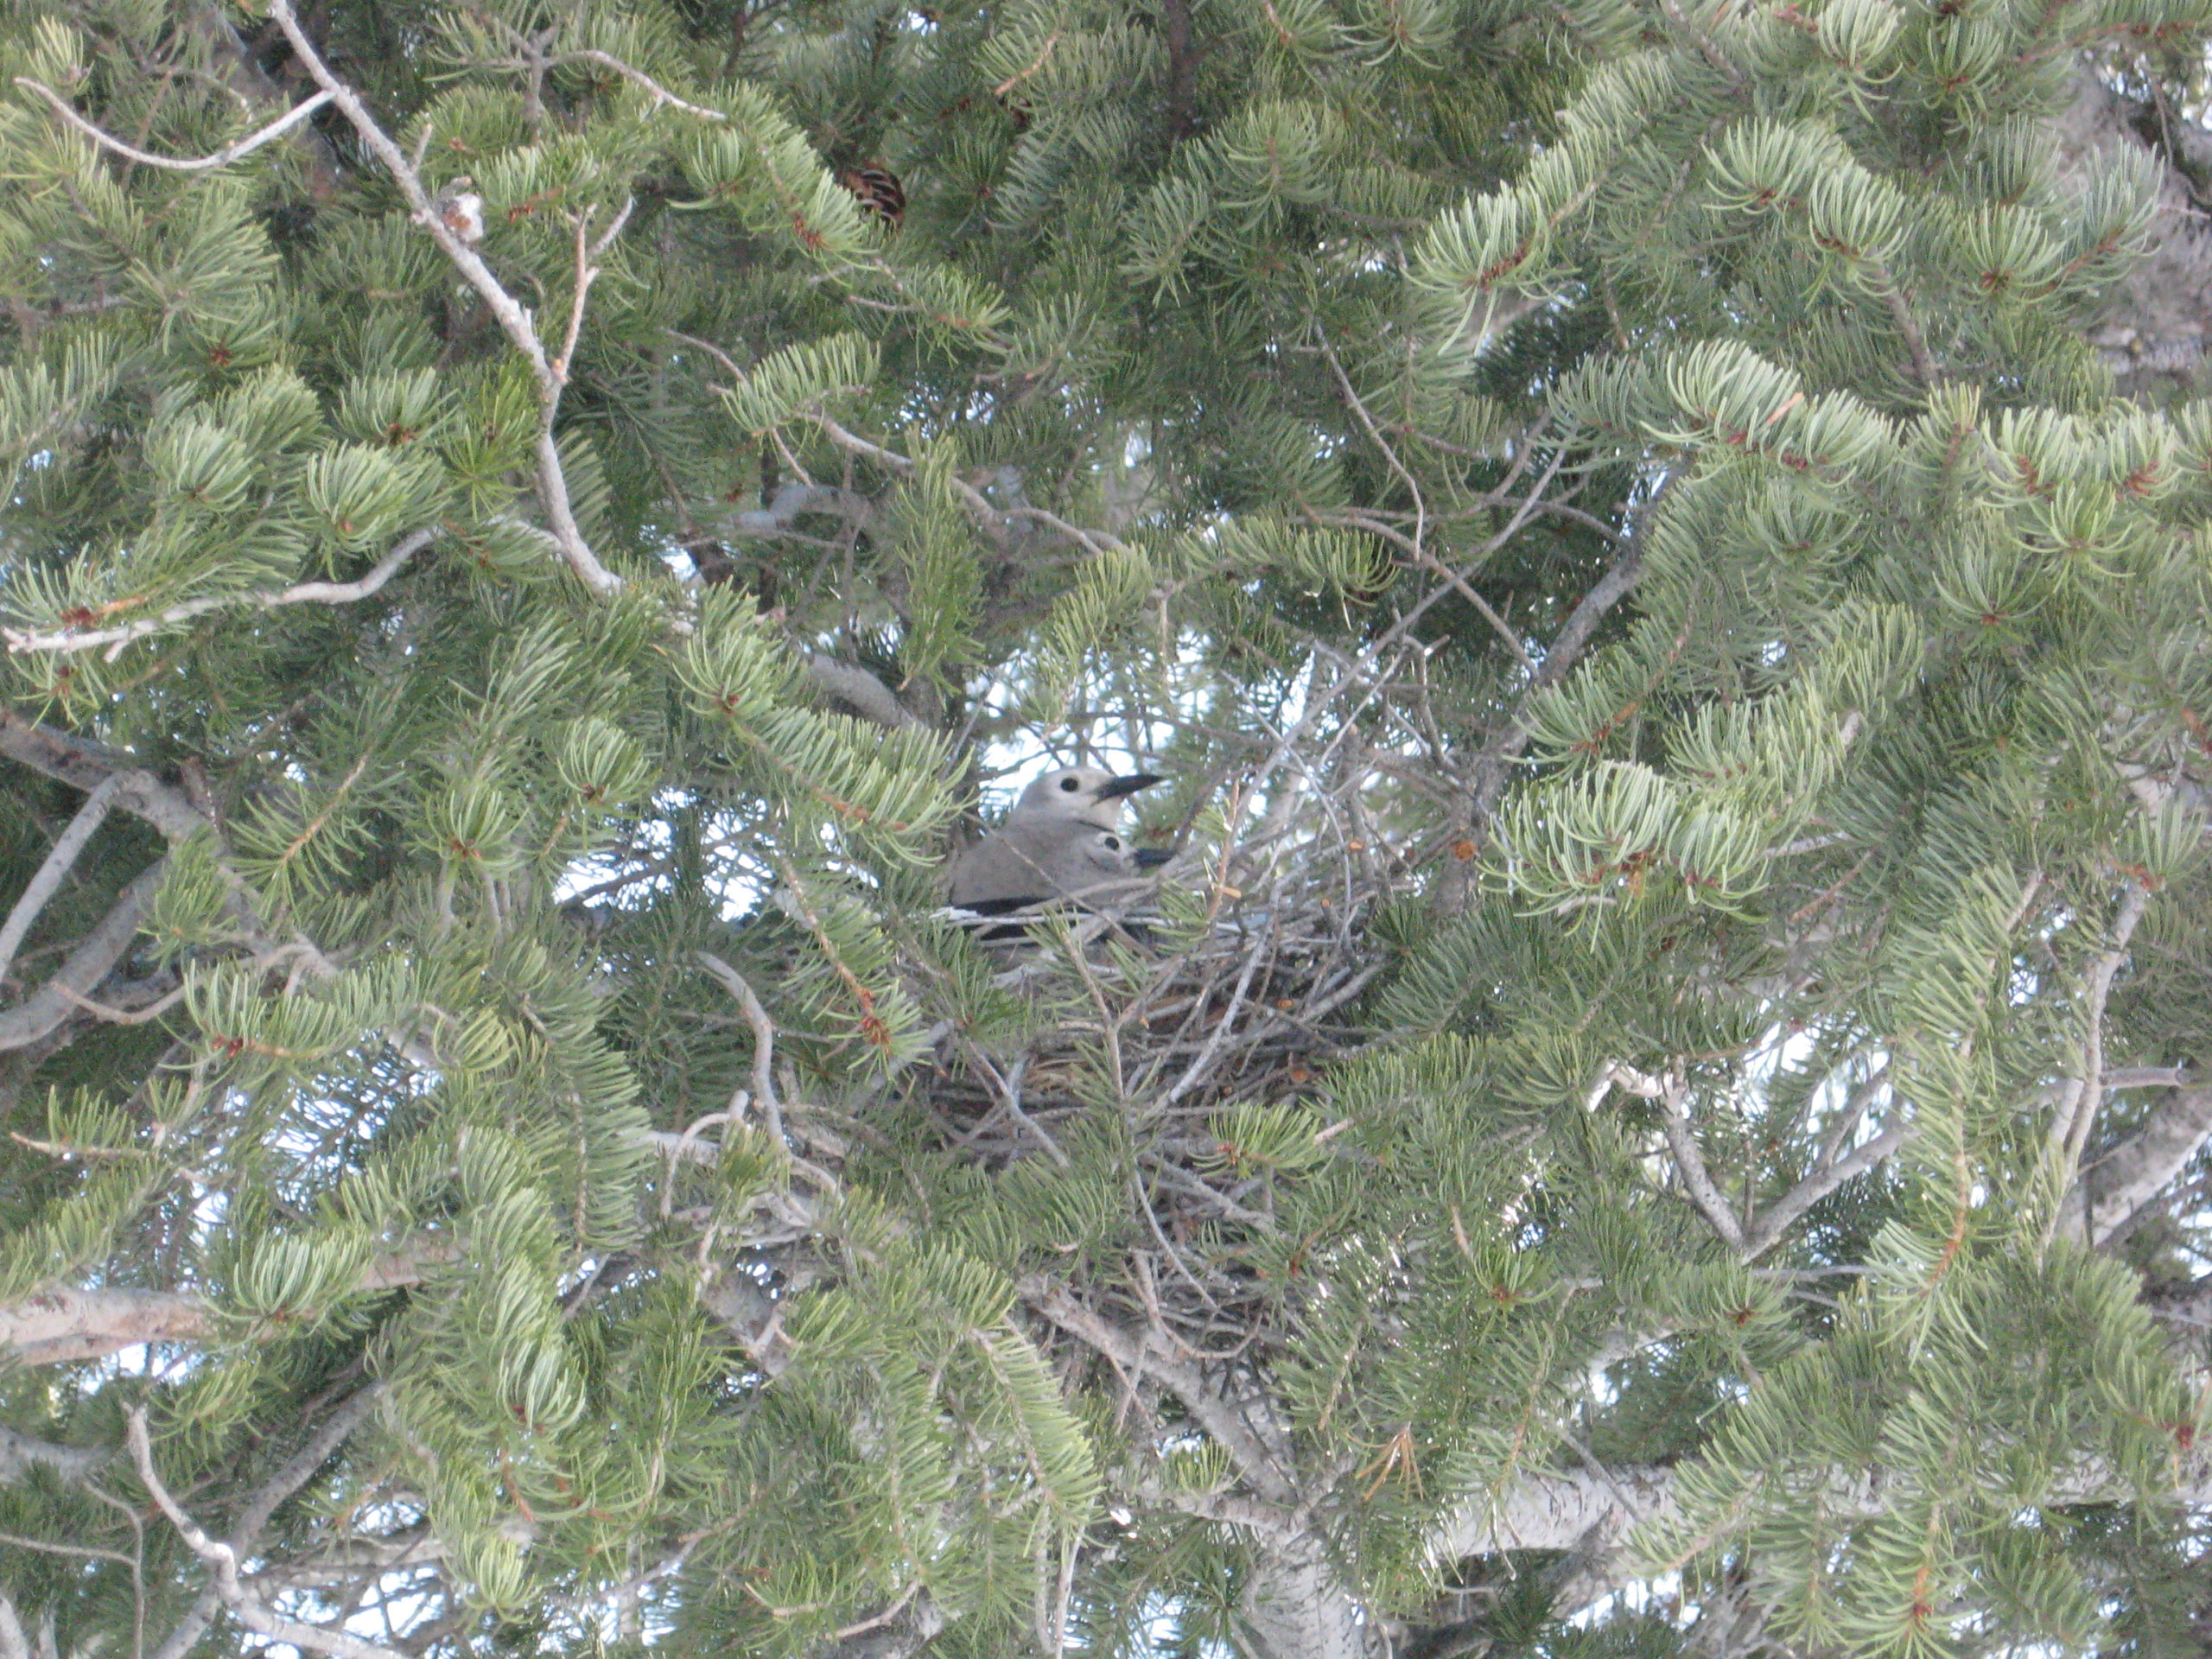 Clark's nutcracker nest hidden in pine tree with two adult birds sitting nearby